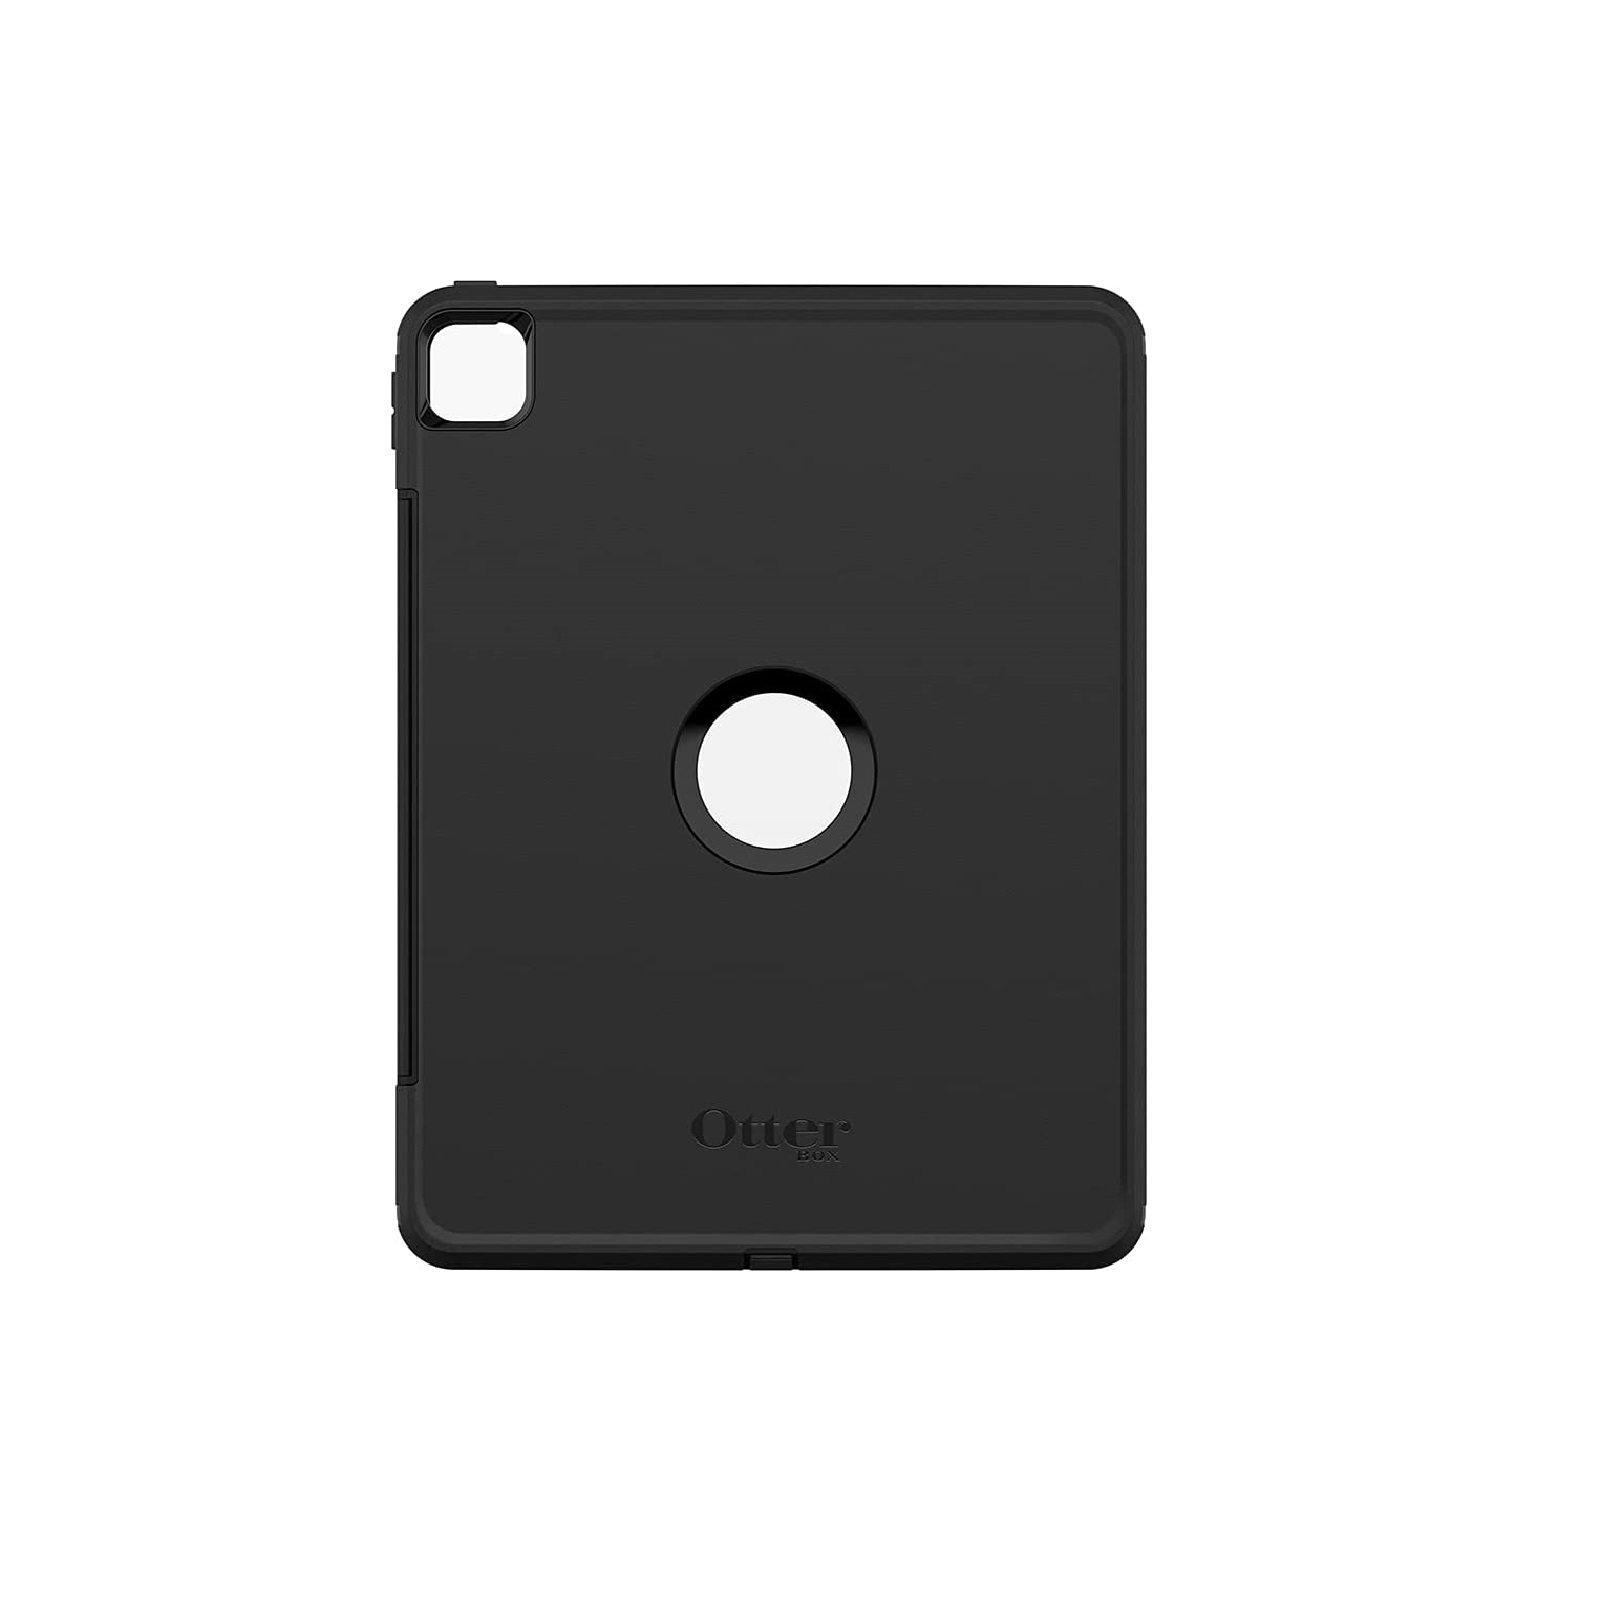 Otterbox iPad Pro 12.9 Gen-5 Defender Black Case [Brand New]